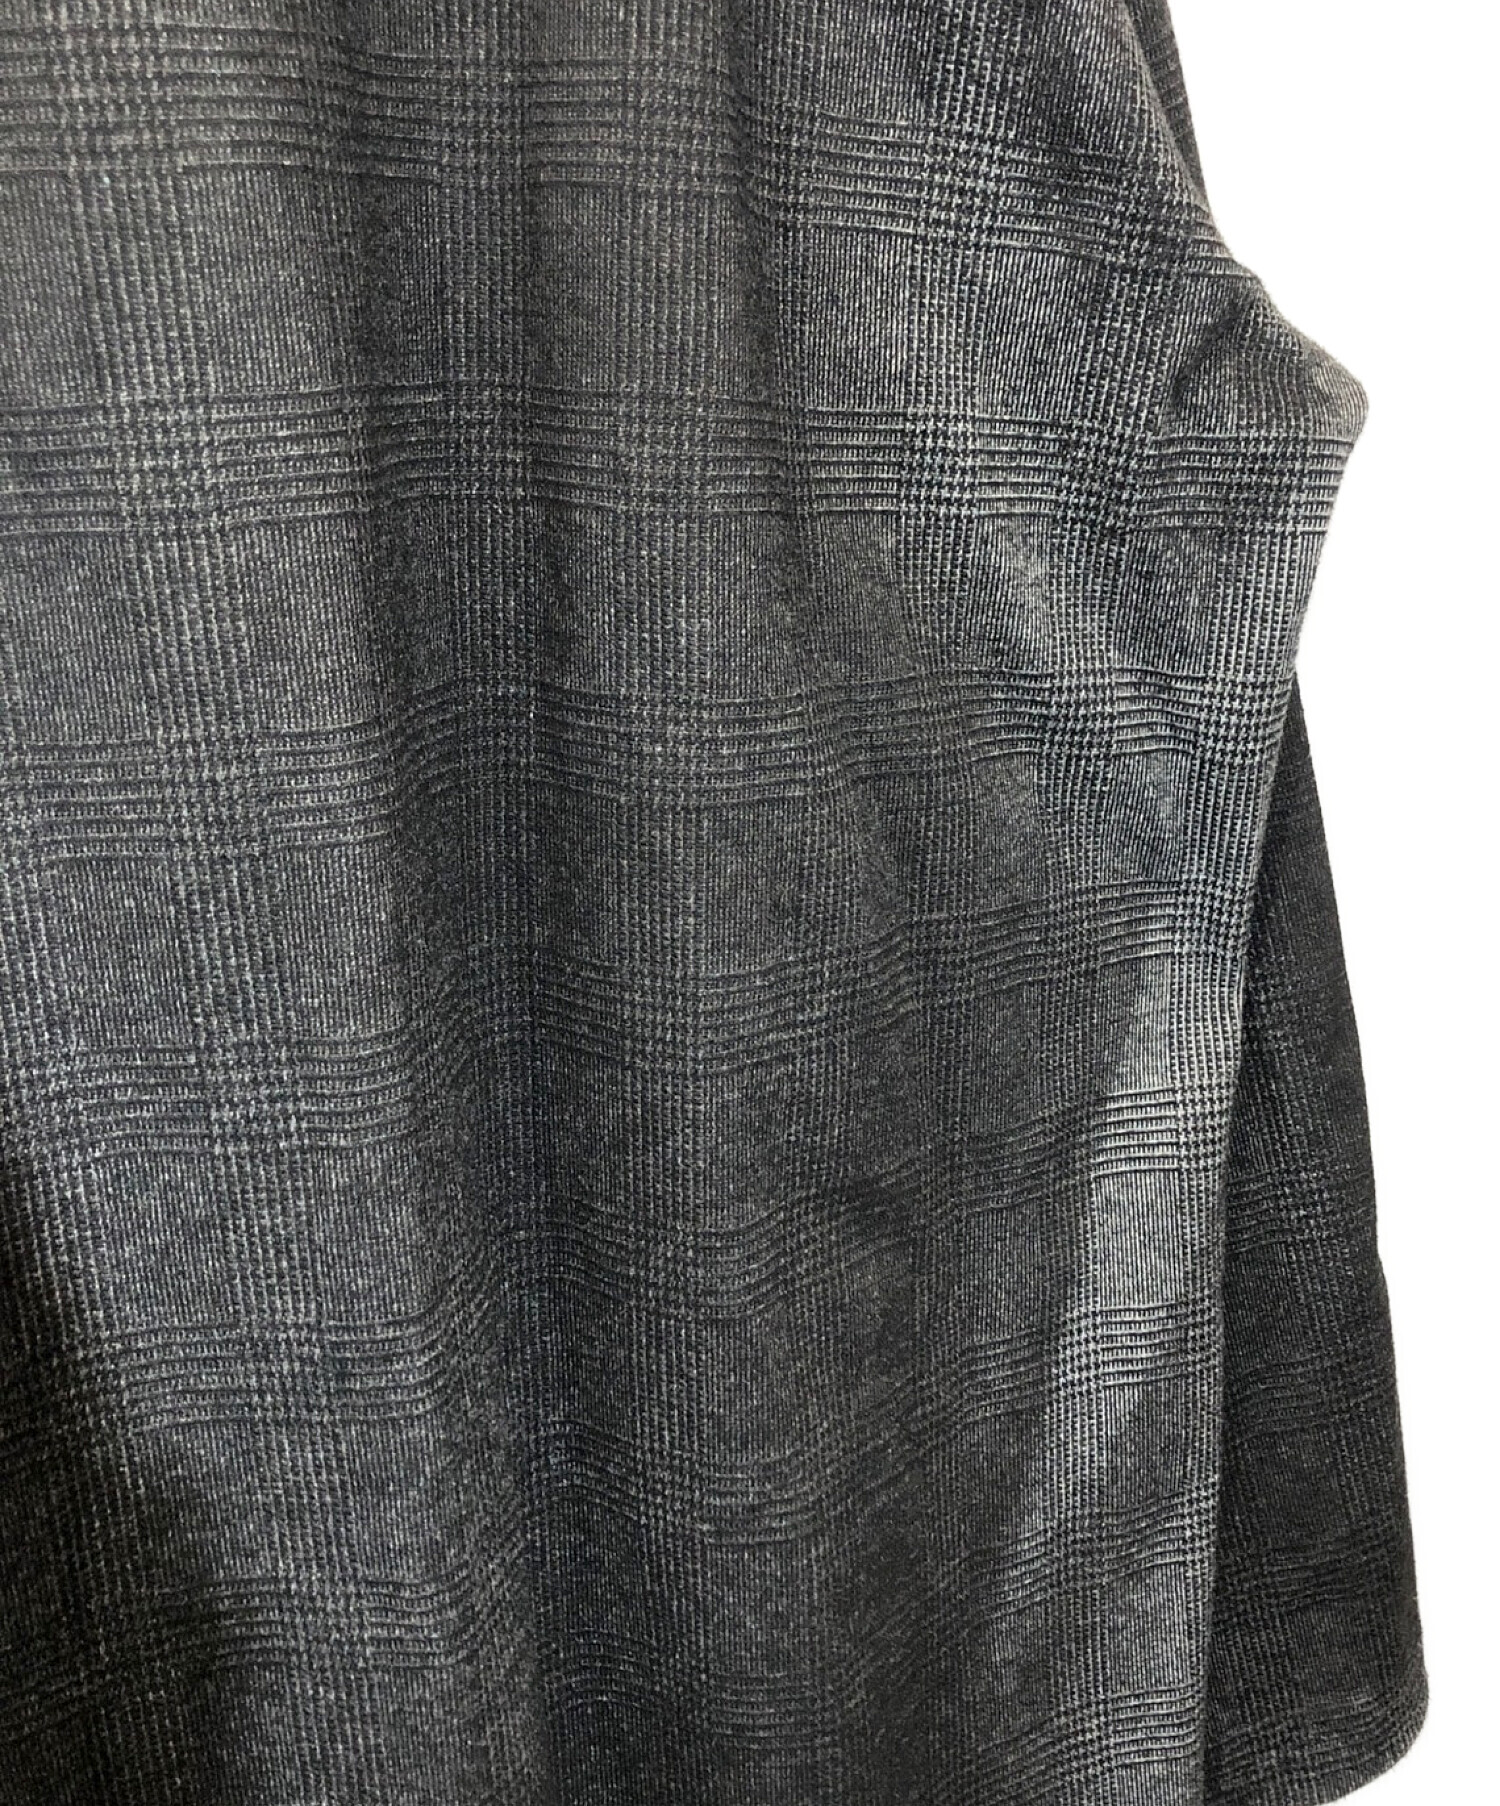 Yohji Yamamoto ツイード ロング丈コート ジャケット素材ウール